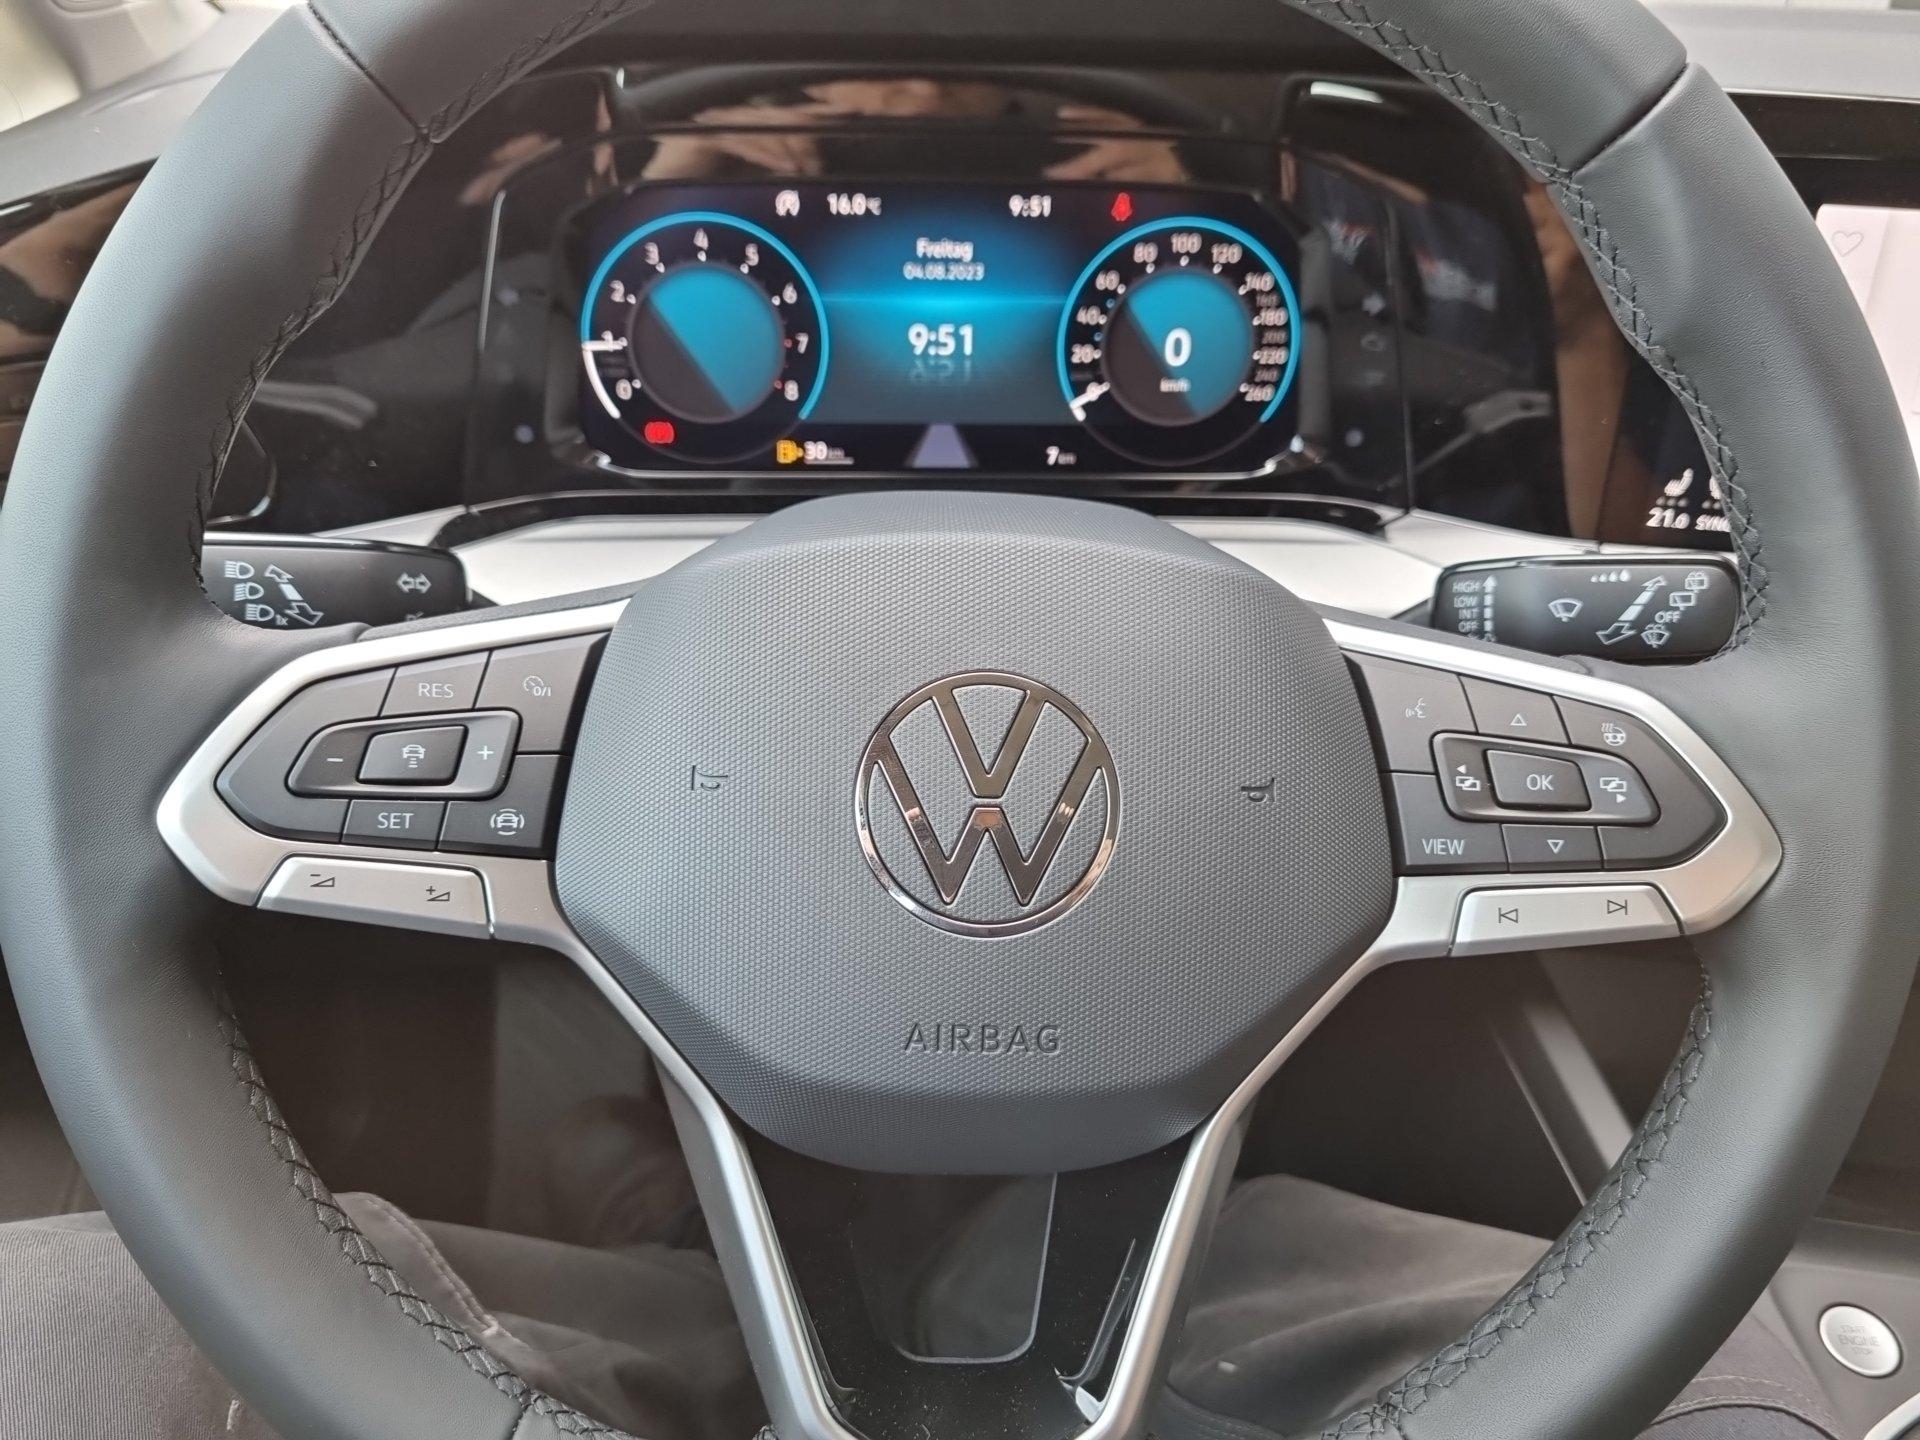 Volkswagen Golf Variant 1.5 TSI 130PS Life Klimaautomatik Sitzheizung  Lenkradheizung LED-Scheinwerfer DAB Bluetooth PDC v+h 16LM-Felgen Apple  Car Play Android Auto AbstandsTempomat EU-Neuwagen Dortmund